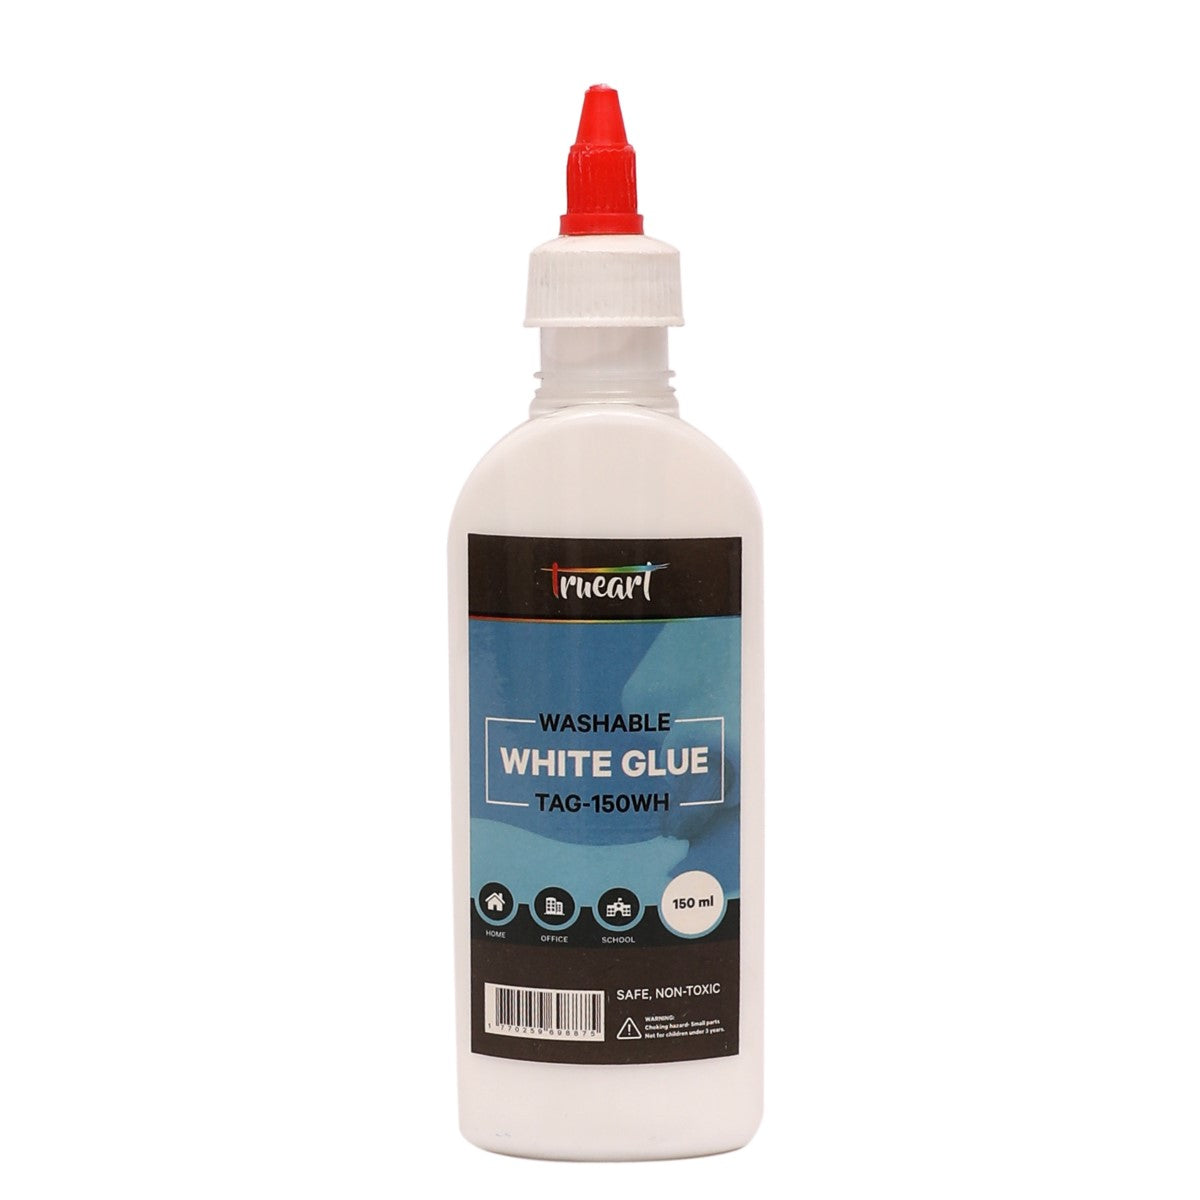 Trueart White Glue 150ml.TAG-150WH